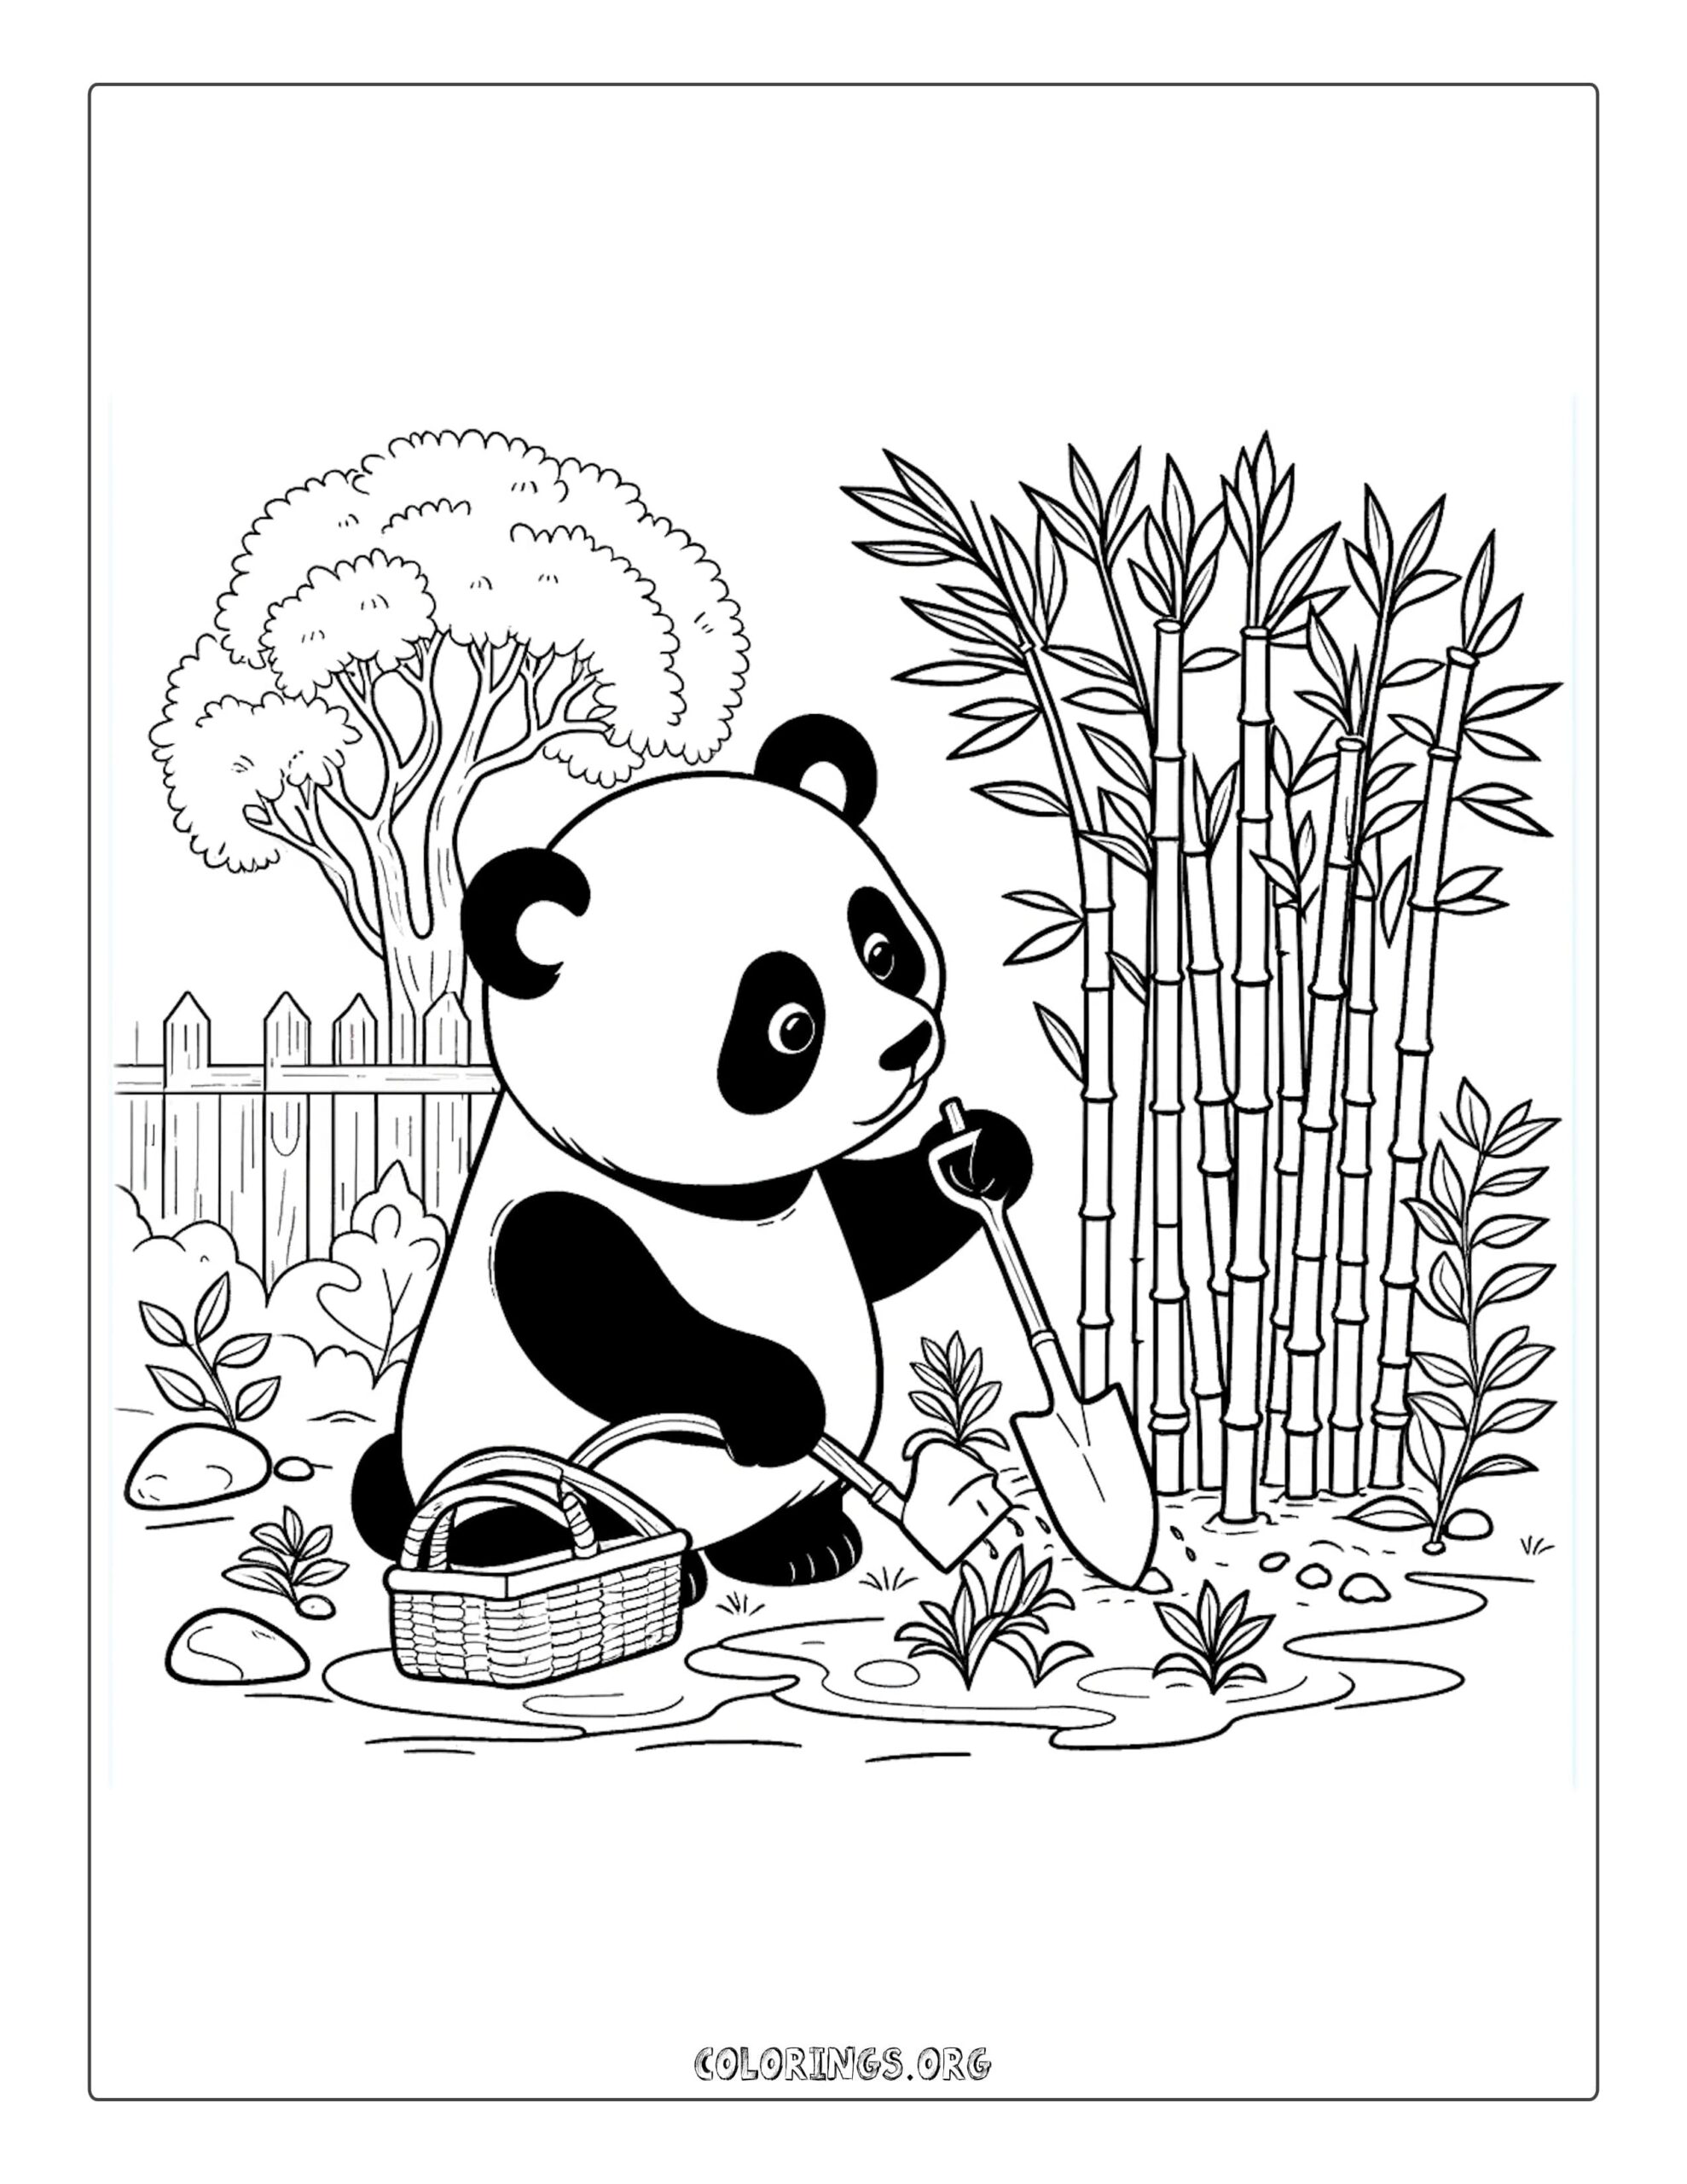 Panda Gardener Planting Bamboo Coloring Page